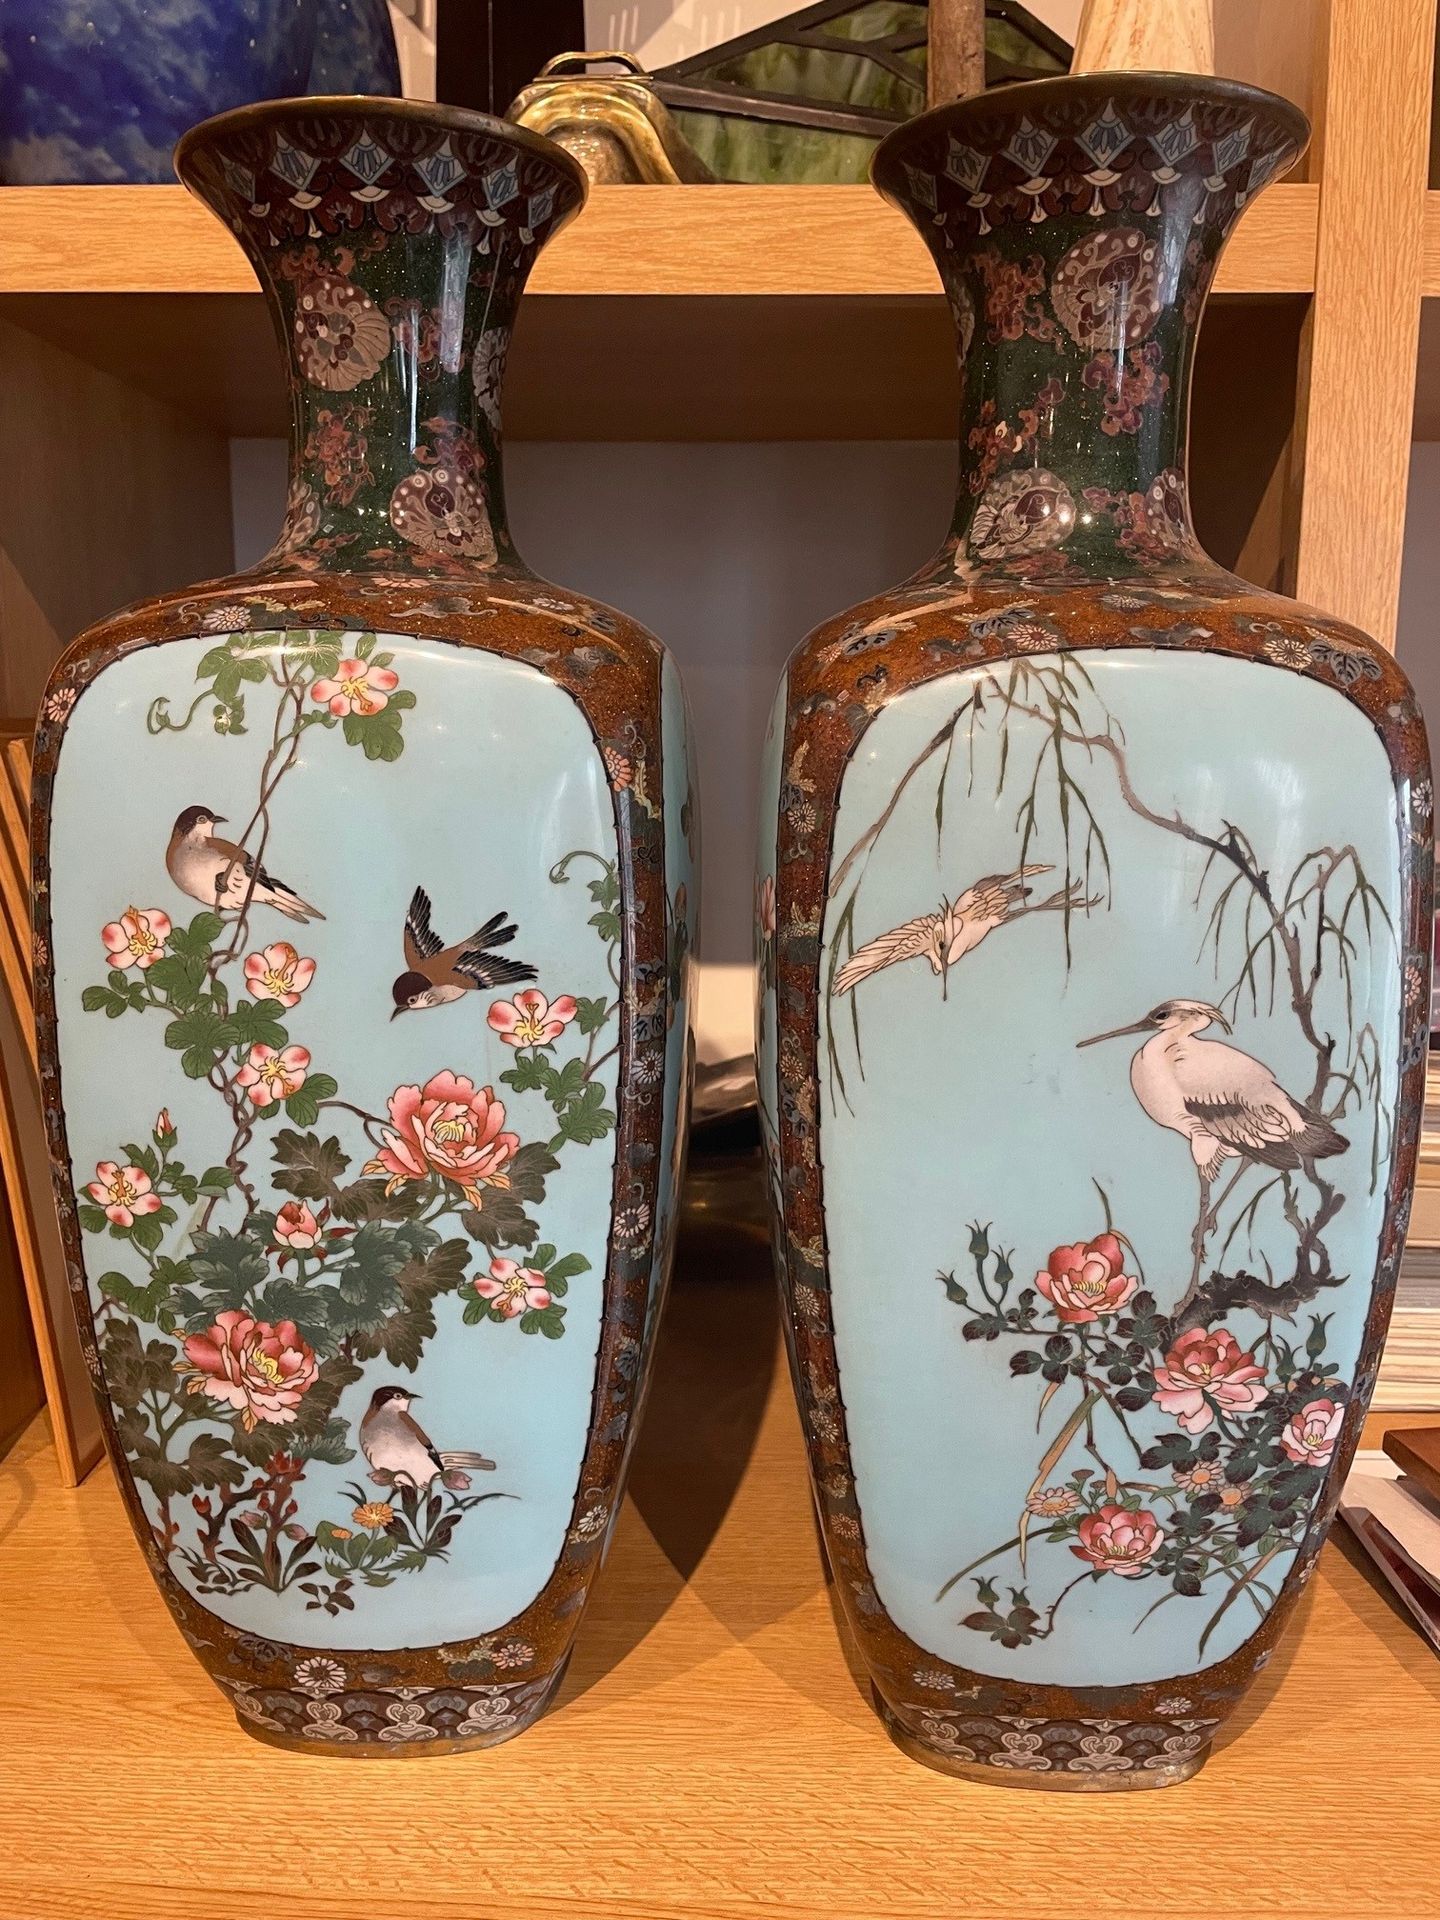 JAPON, époque Meiji (1868-1912) 一对景泰蓝花瓶
有保留的鸟类装饰
H.54 cm